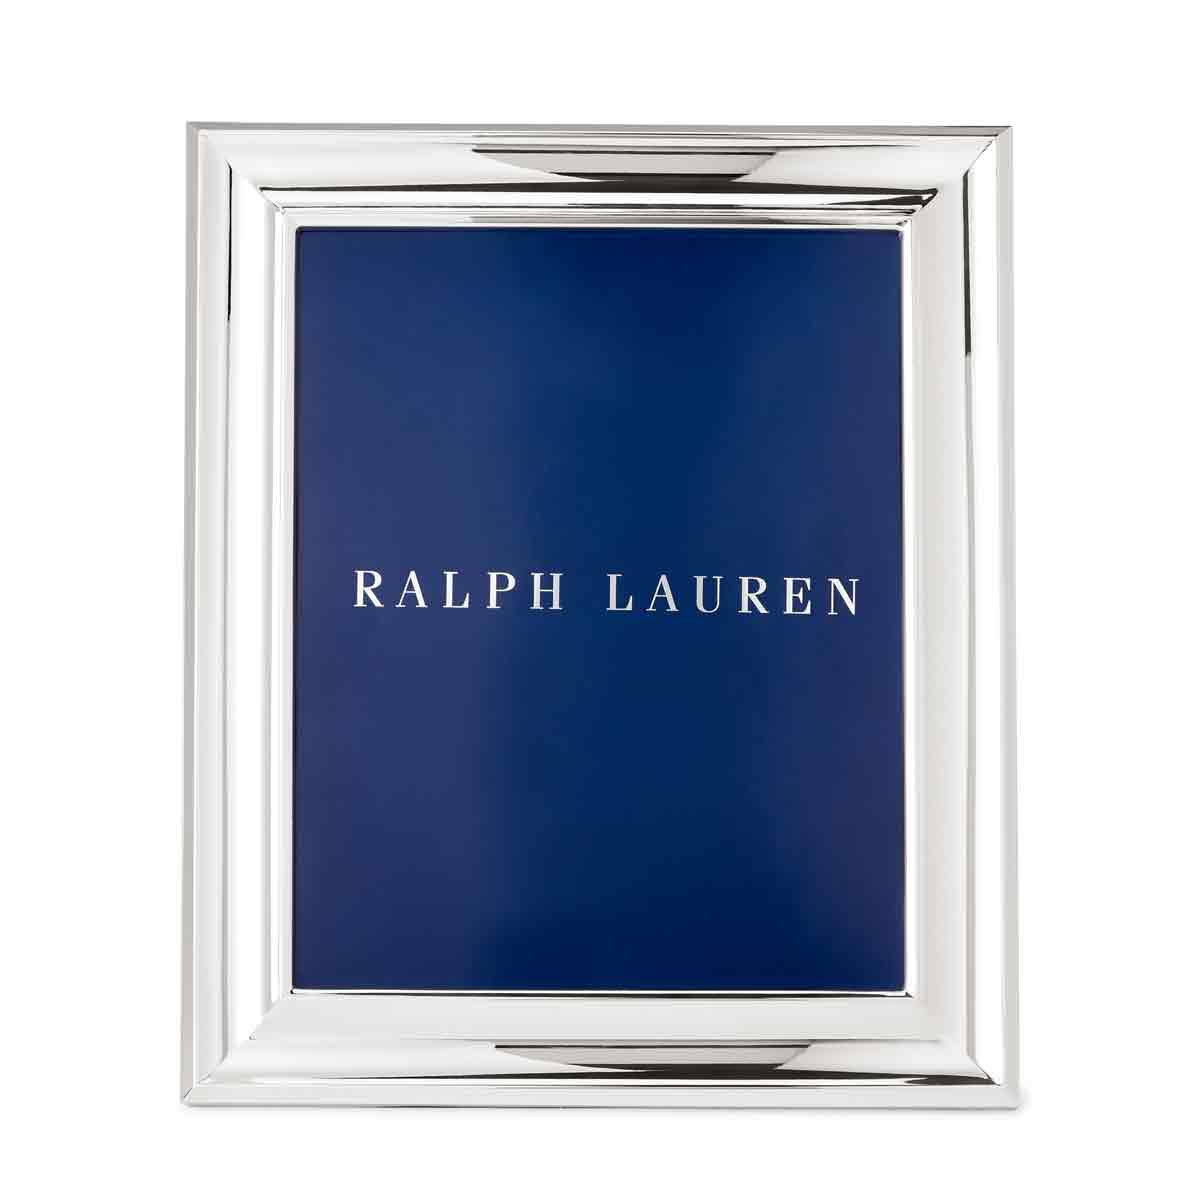 Ralph Lauren Olivier 8x10" Picture Frame